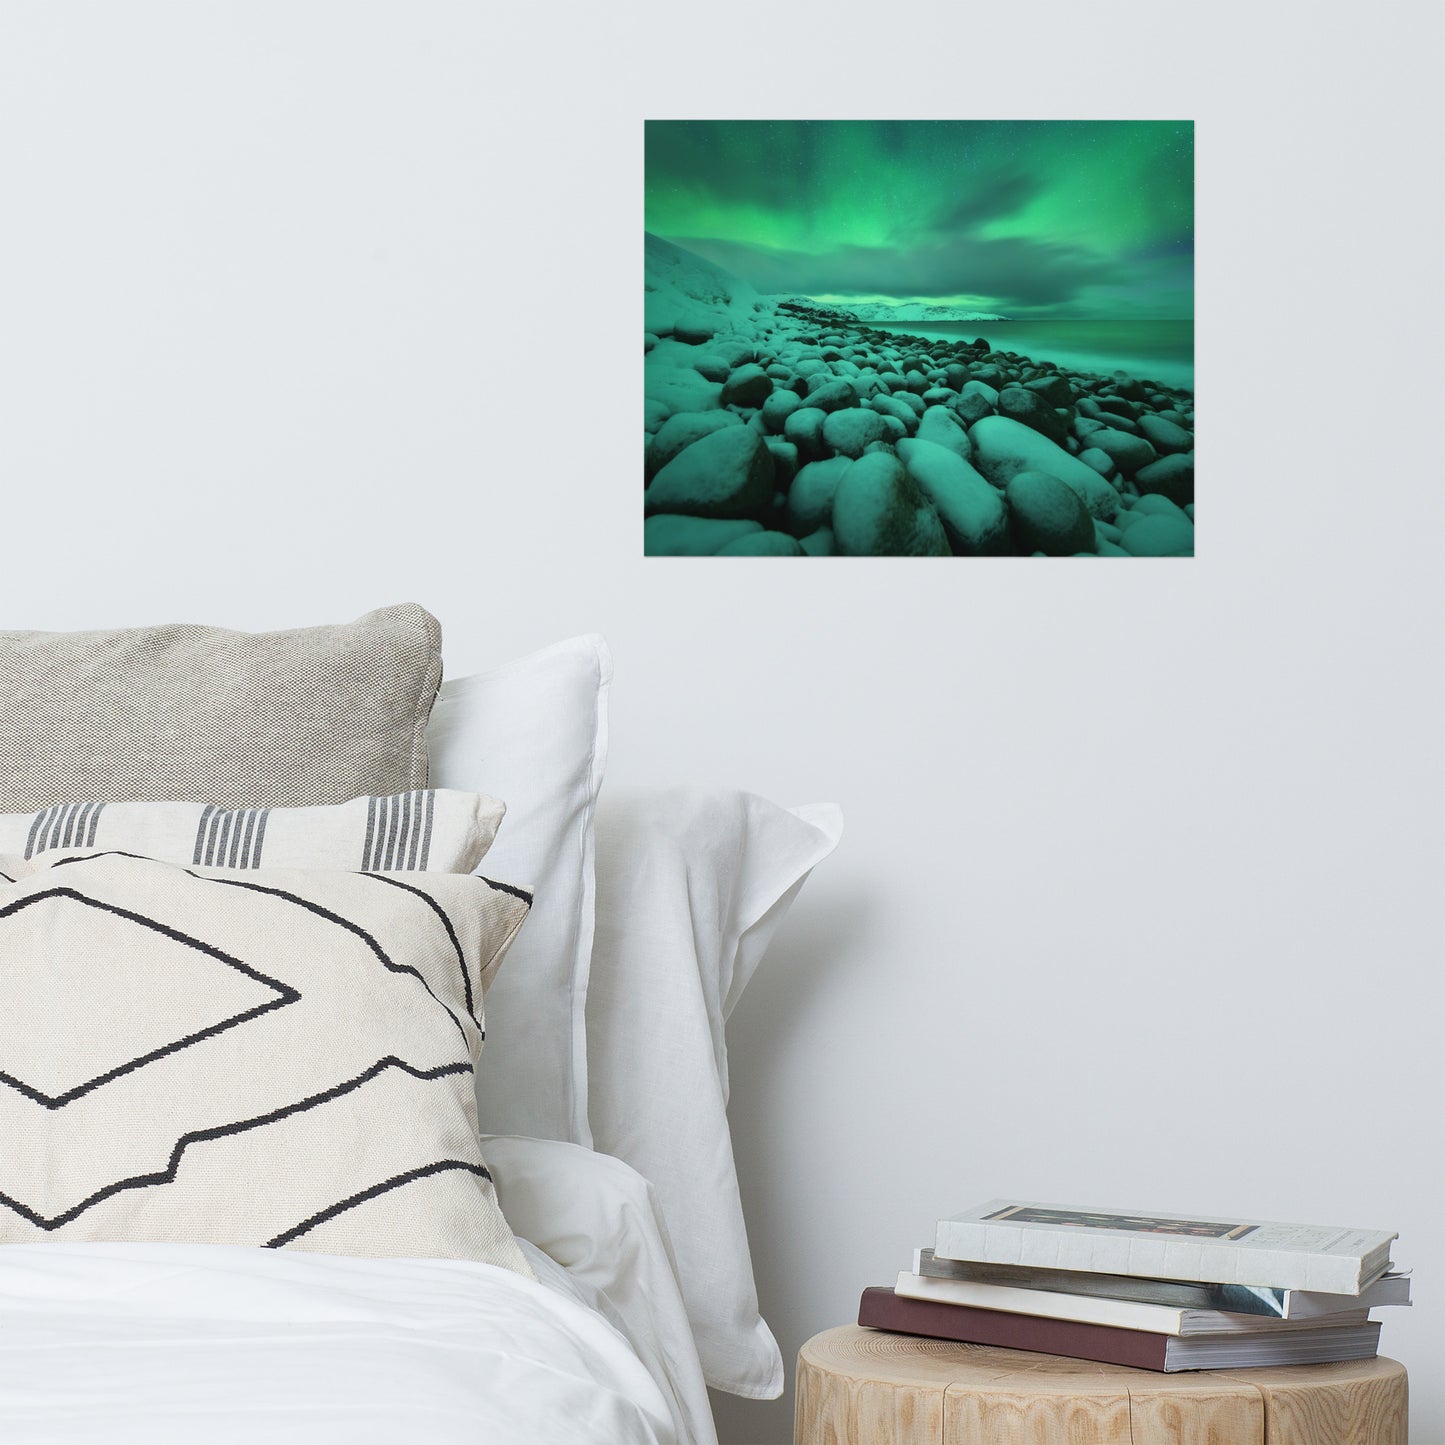 Bedroom Artwork Above Bed: Aurora Borealis Over Ocean in Teriberka Night - Northern Lights - Seascape - Rural / Country Style Landscape / Nature Loose / Unframed / Frameless / Frameable Photograph Wall Art Print - Artwork